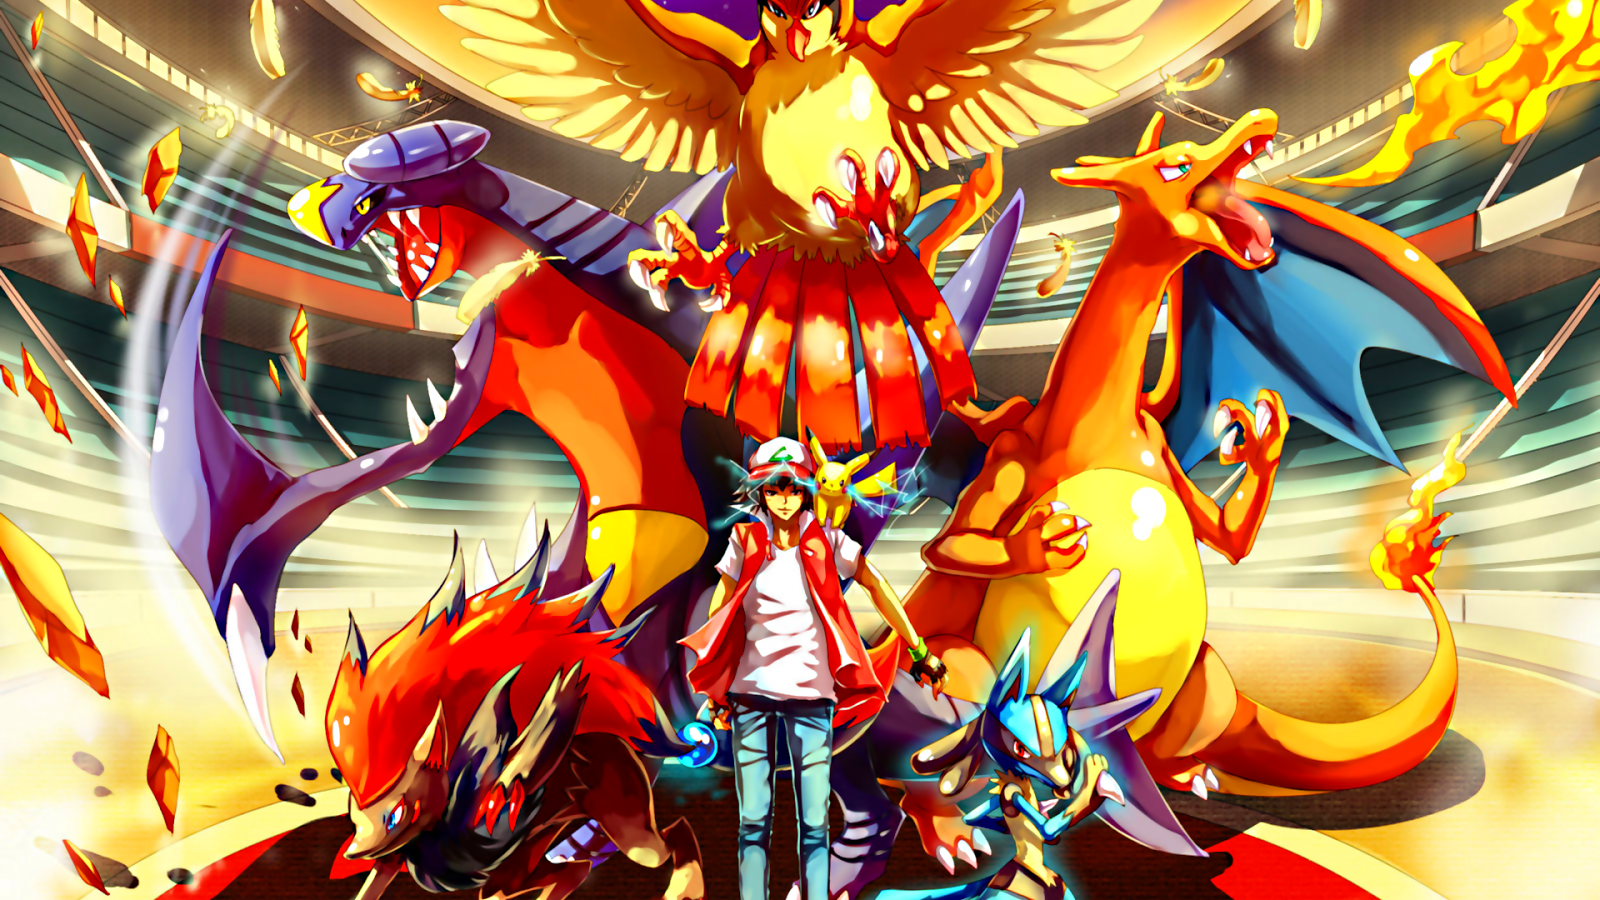 Cool Fire Pokemon Wallpaper Background